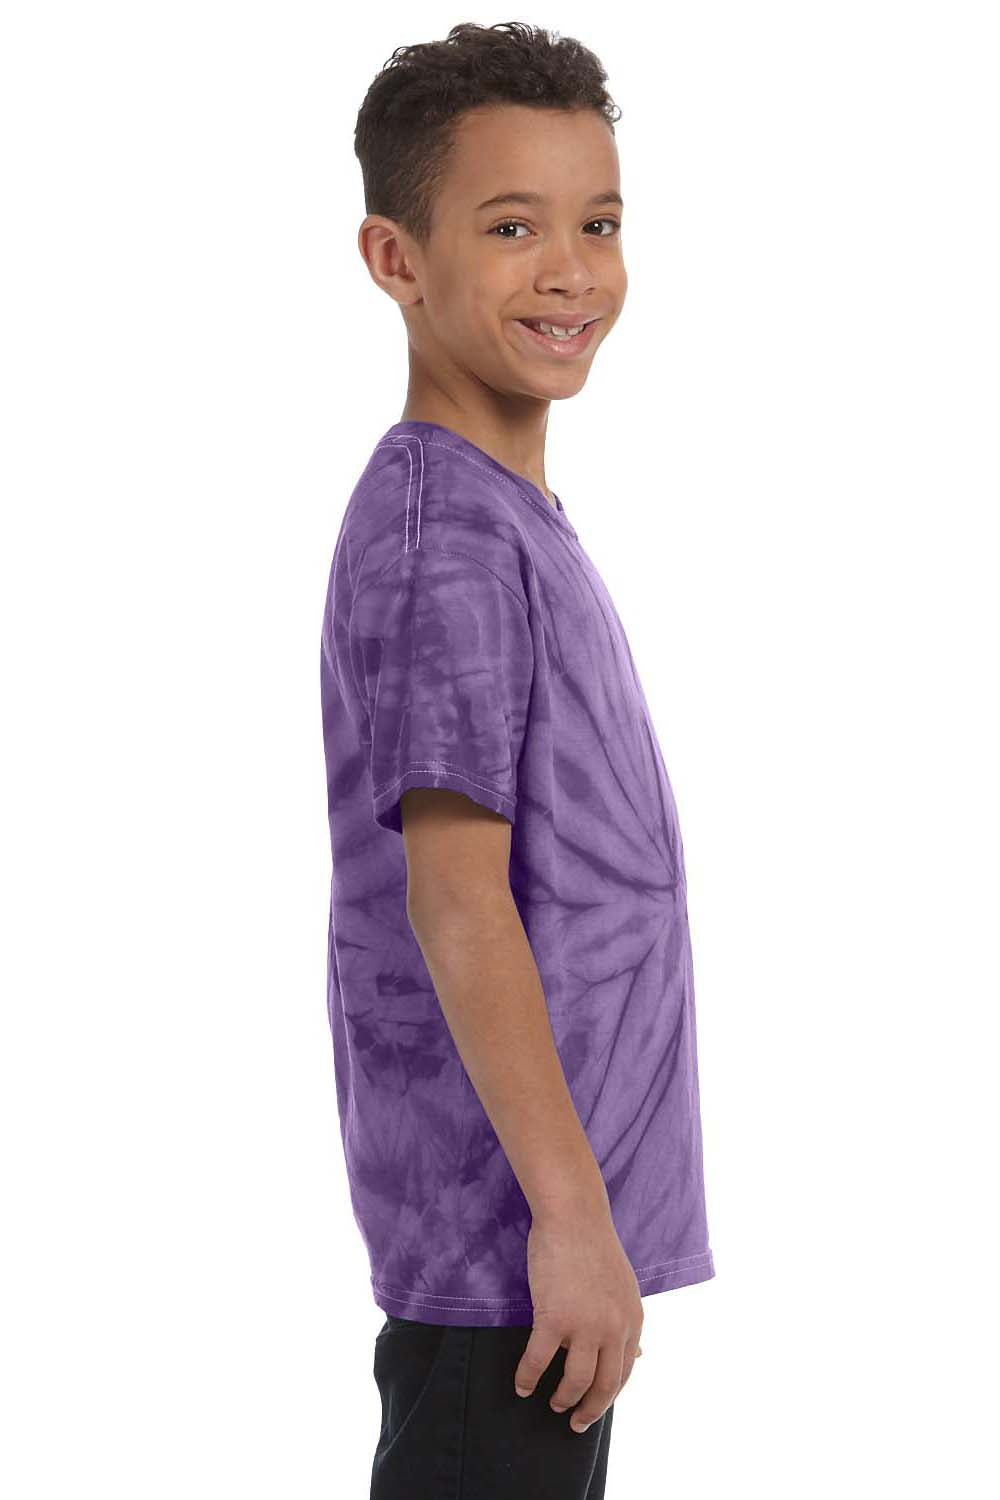 Tie-Dye CD101Y Youth Short Sleeve Crewneck T-Shirt Purple Side